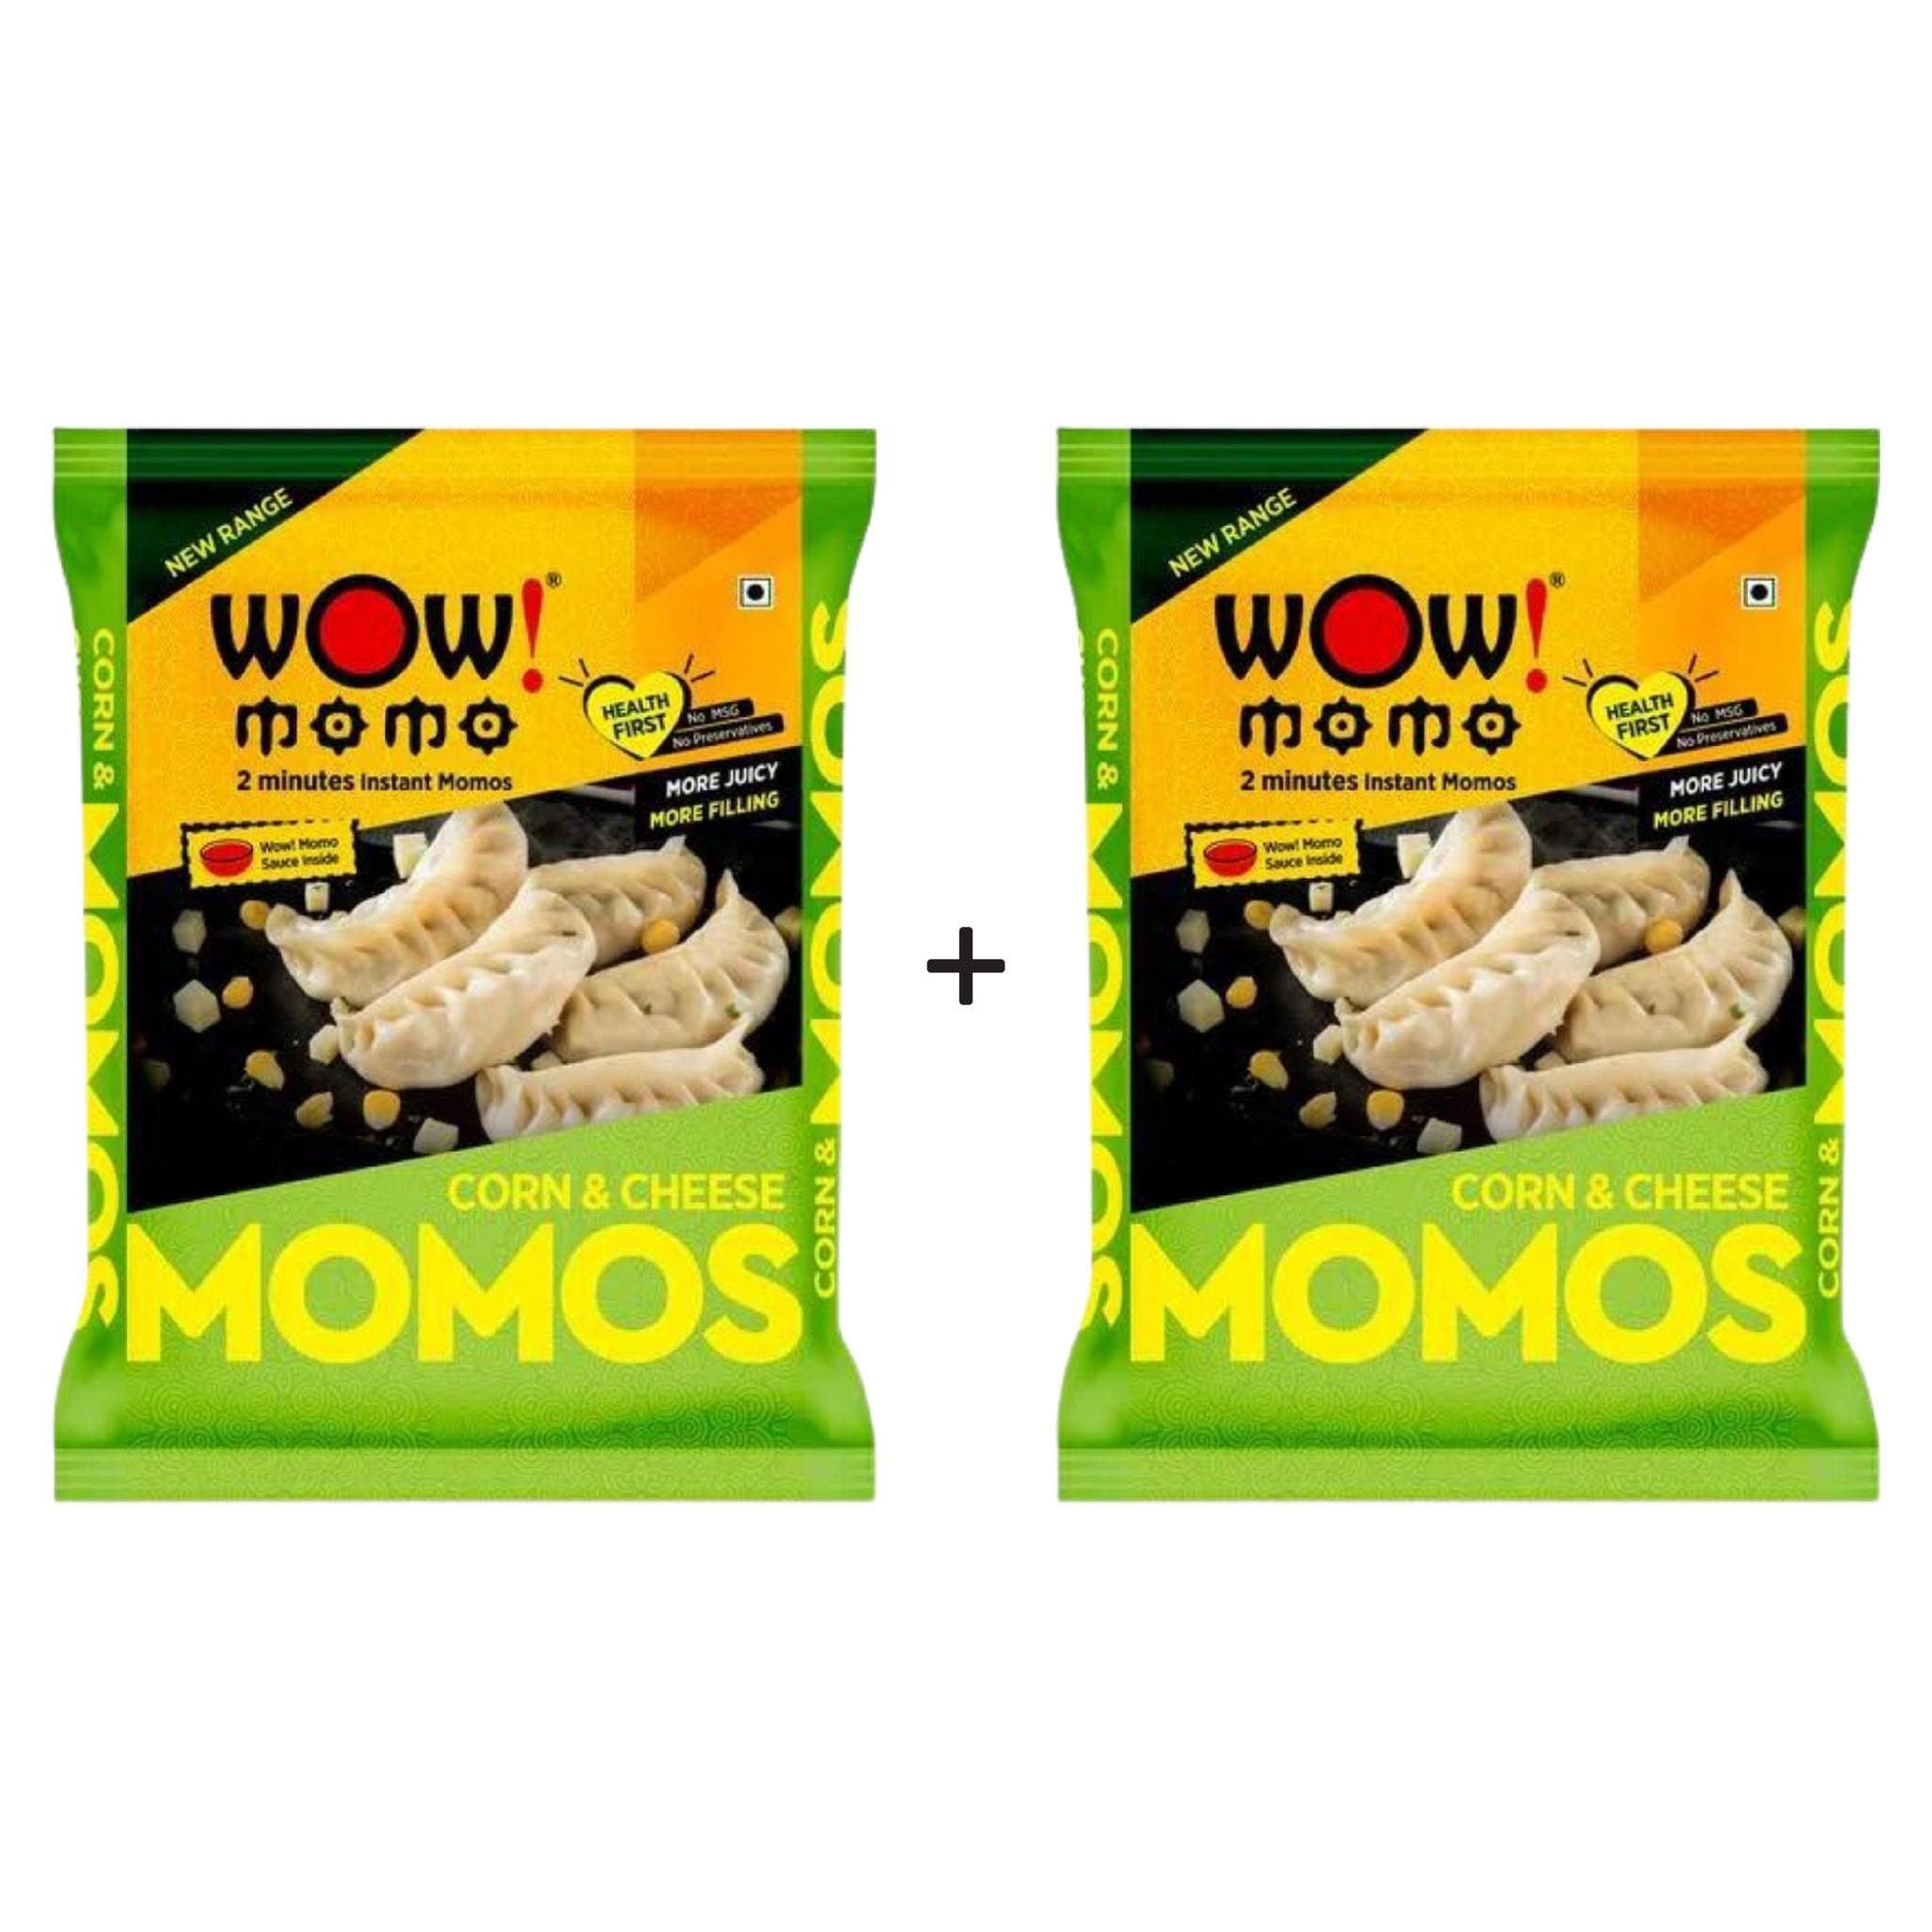 Wow! Corn & Cheese Momos